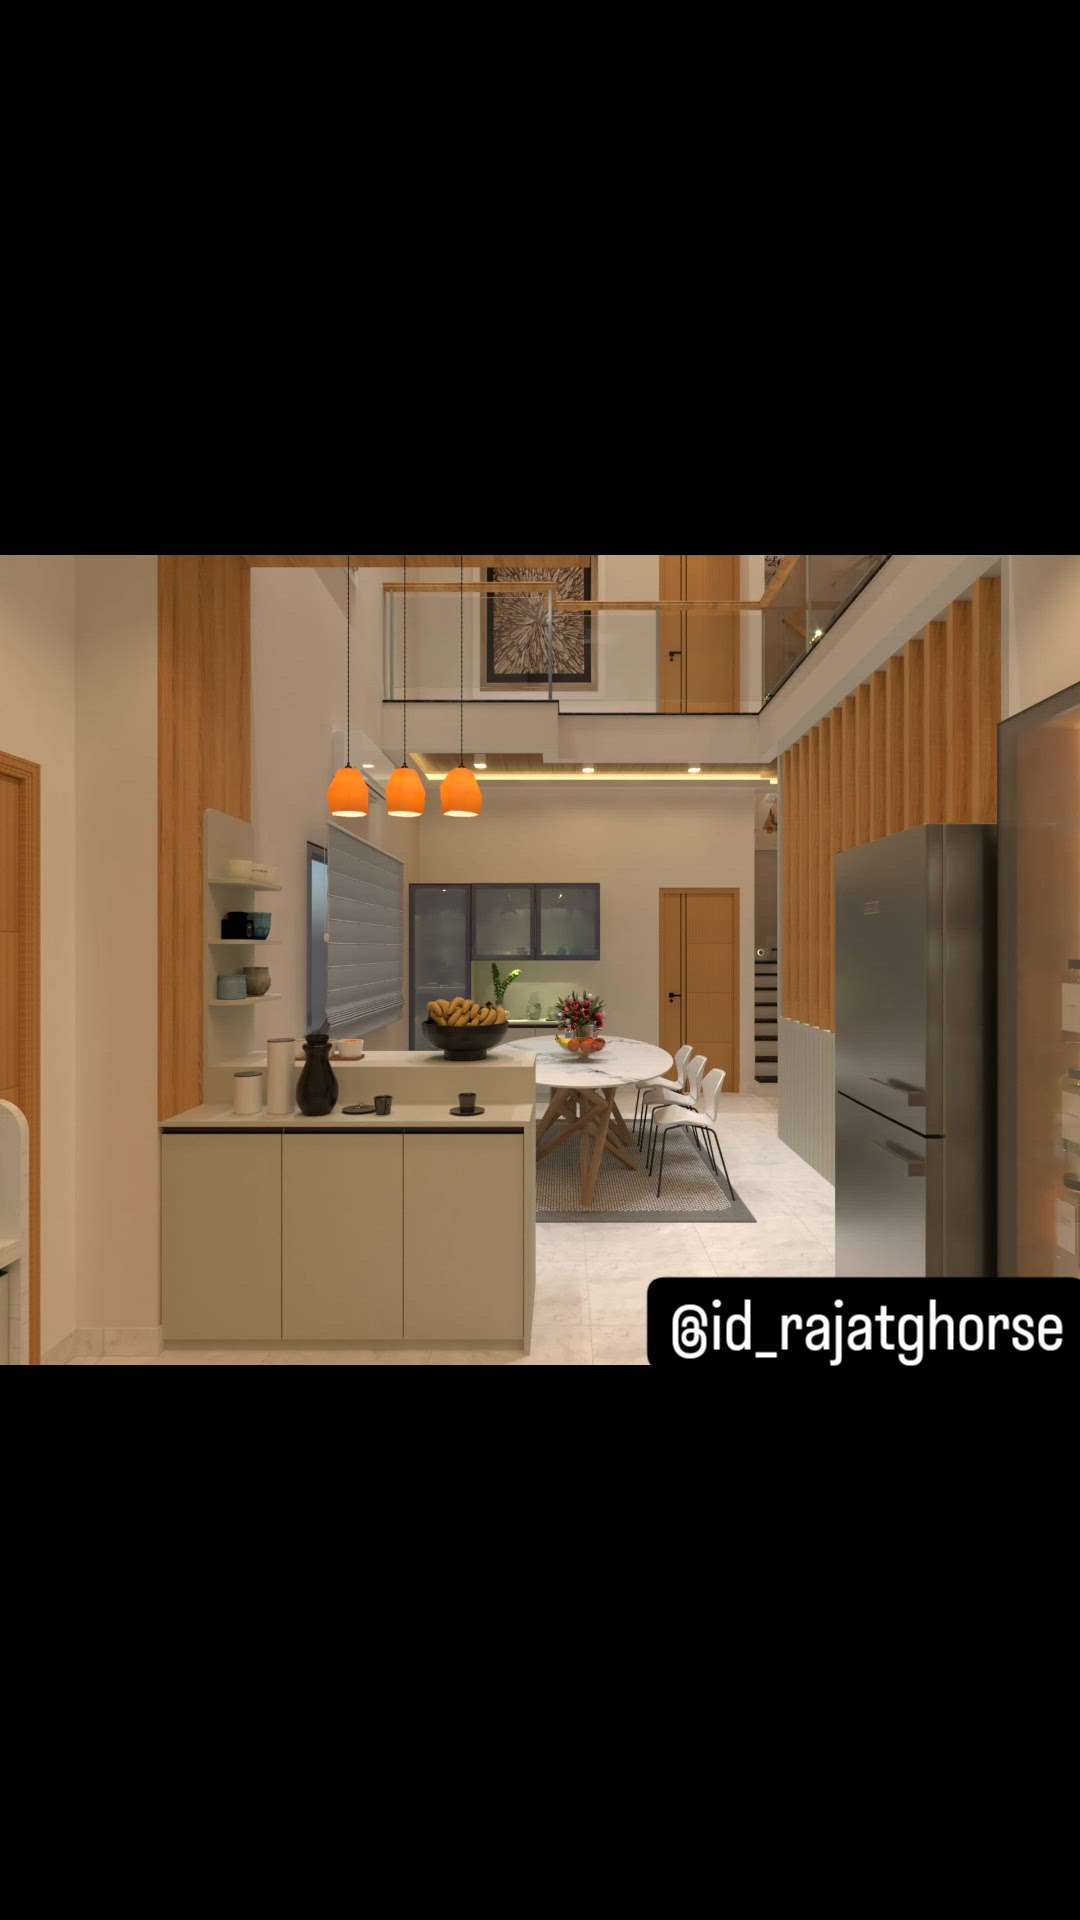 Dining Area Design
.
.
.
.
.
#interiordesign #interior #interiordesigner #interiordecor #interiordecorating #interiør #interioinspiration #interiorstyling #interiorstyle #interiorarchitecture #interiordetails #interiordesigninspiration #interiordesigninspo #Indore   #bhopal  #dinningroomdecor #breakfast #breakfasttabledecor #crockery #partitions #homeinterior #homeinspo #homedecor #homedecoration #home #homestyle #homestyling